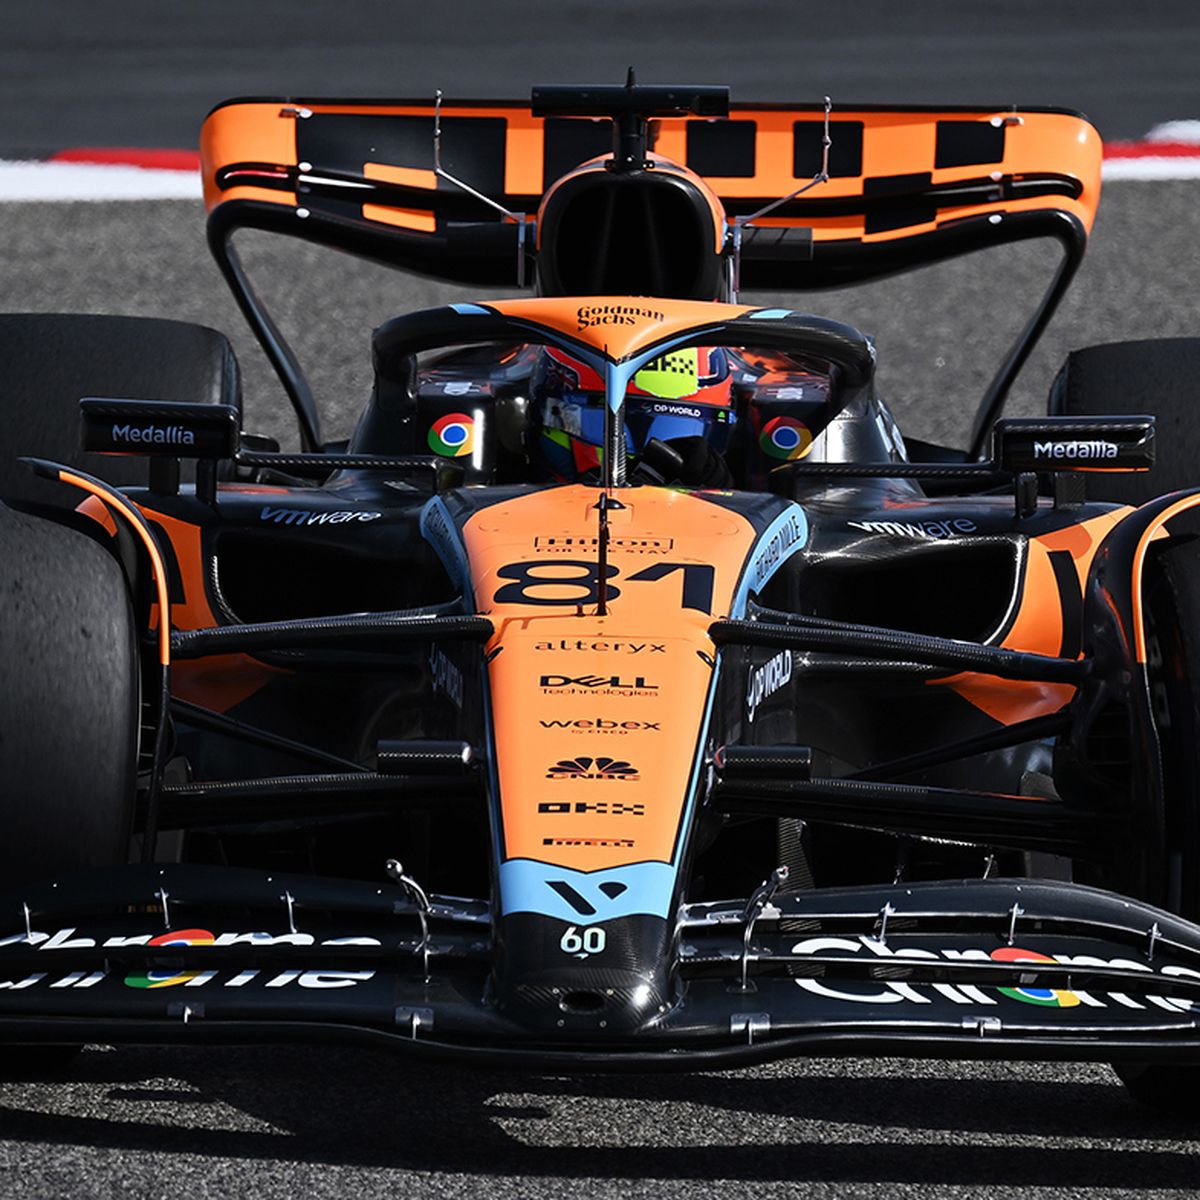 Oscar Piastri - F1 Driver for McLaren